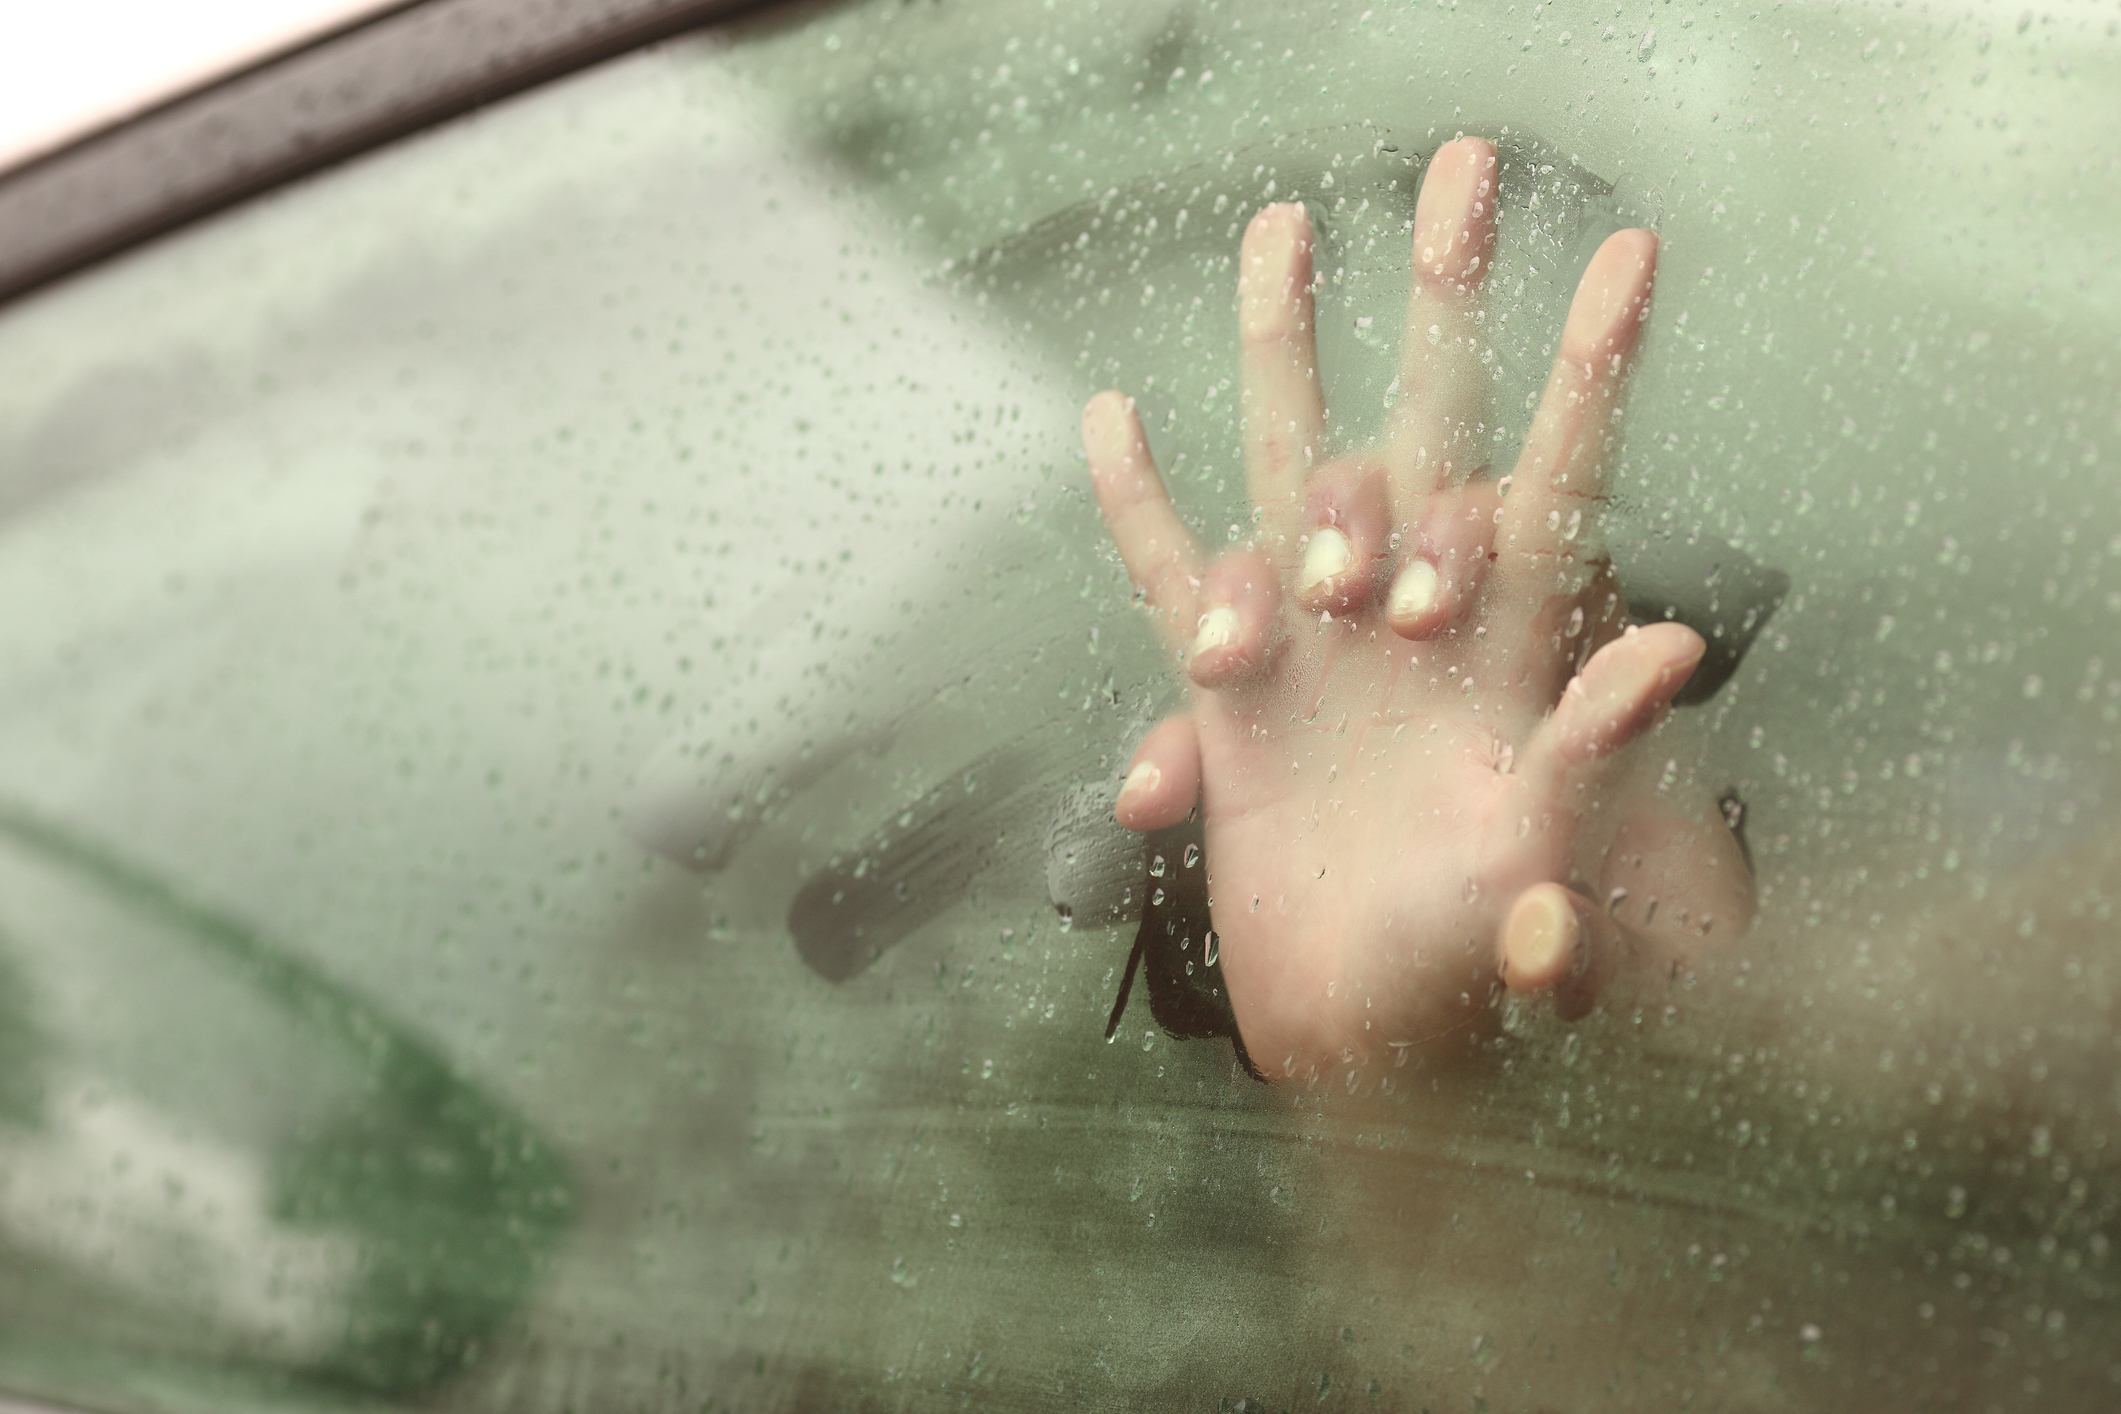 Hand pressed against steamy car window, implying intimacy